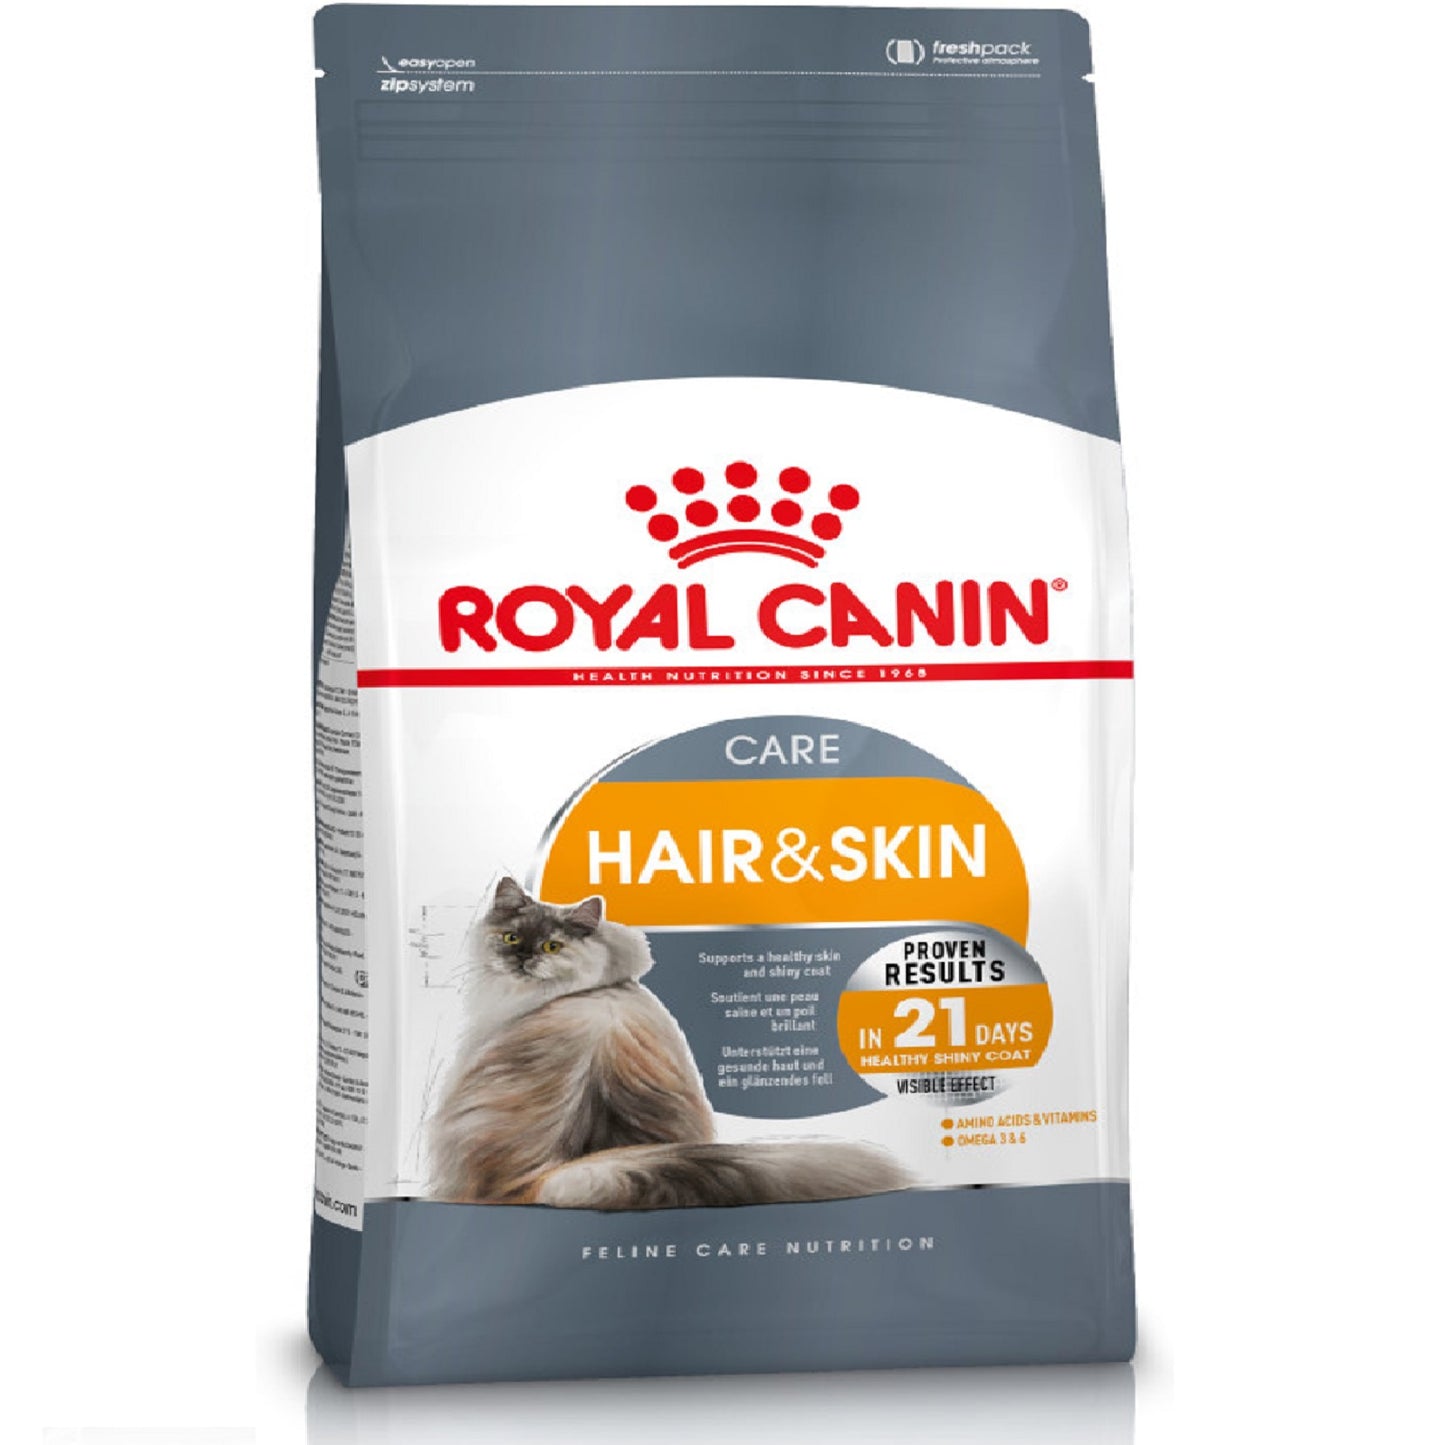 ROYAL CANIN - Hair & Skin Care